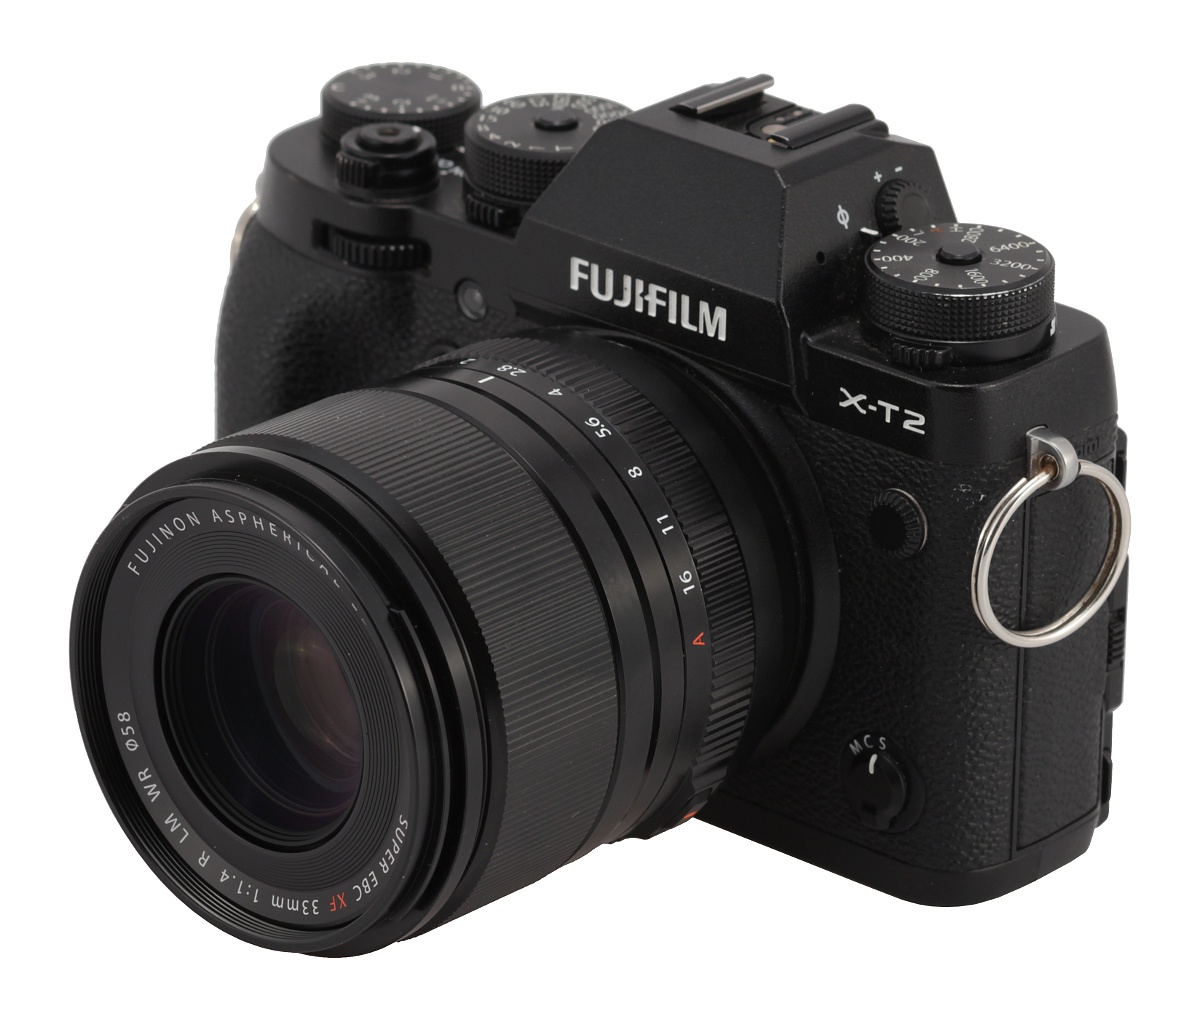 Fujifilm Fujinon XF 33 mm f/1.4 R LM WR review - Introduction 